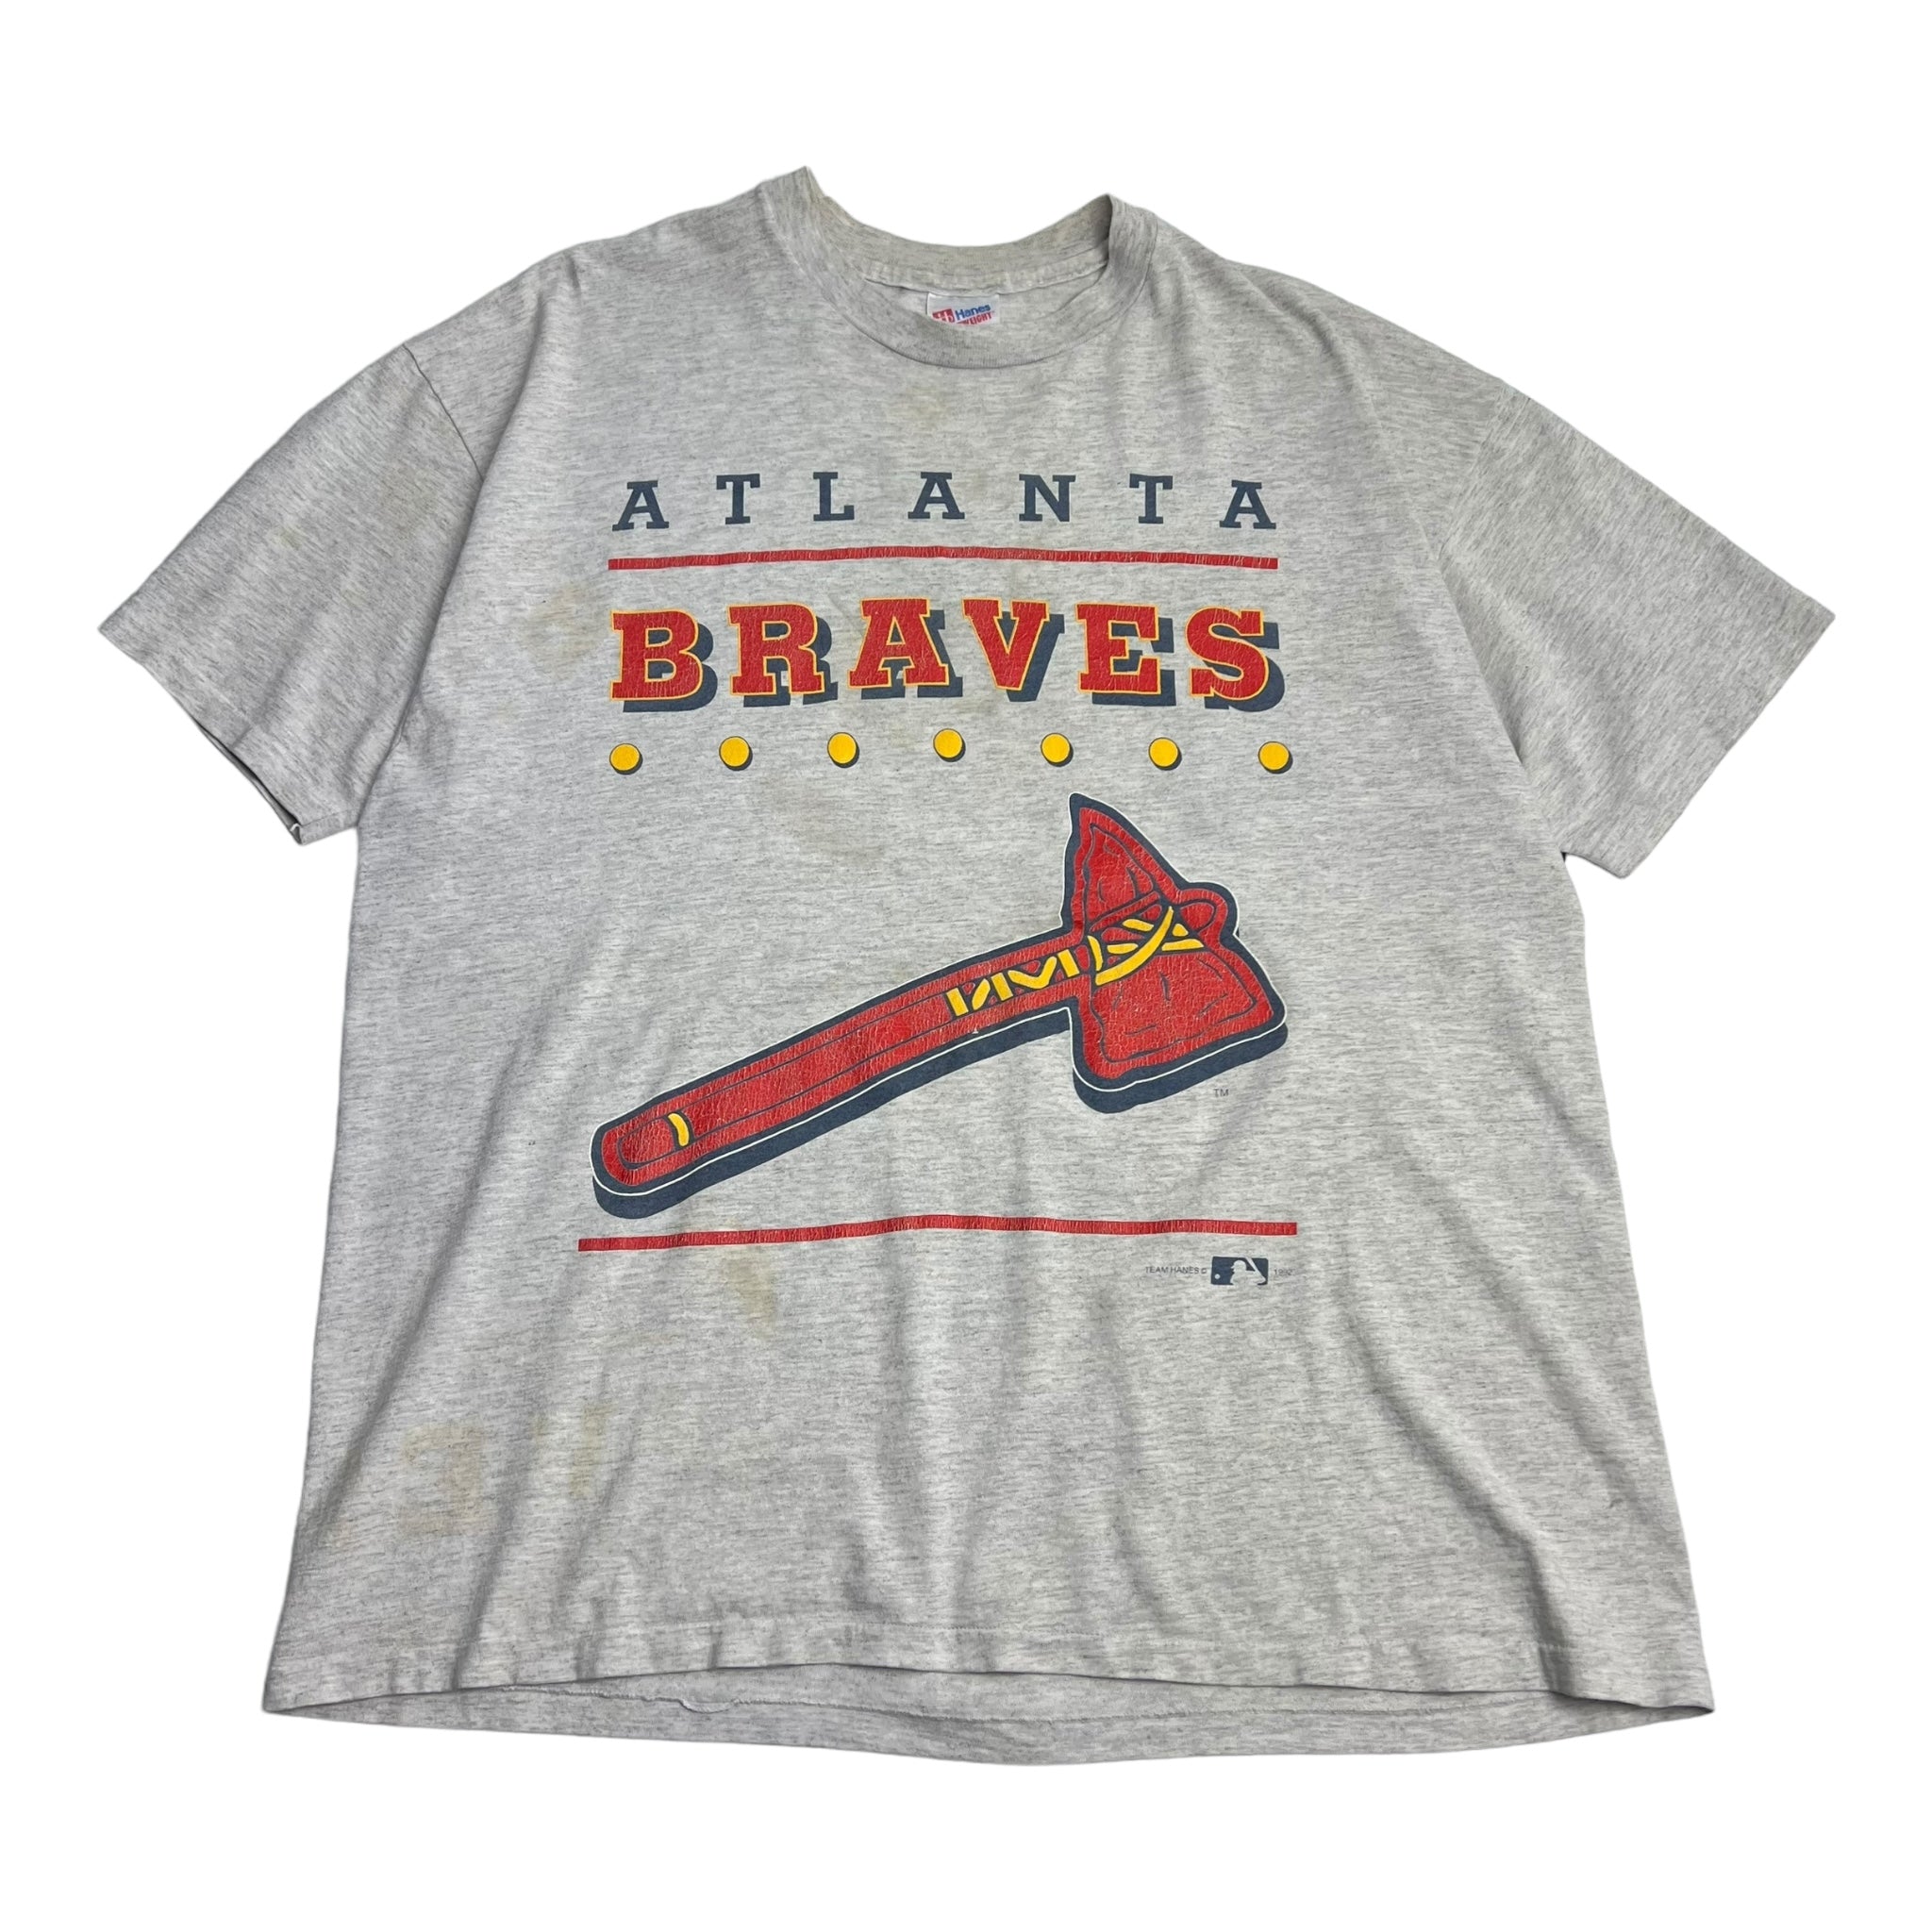 1992 Atlanta Braves Axe T-Shirt, White